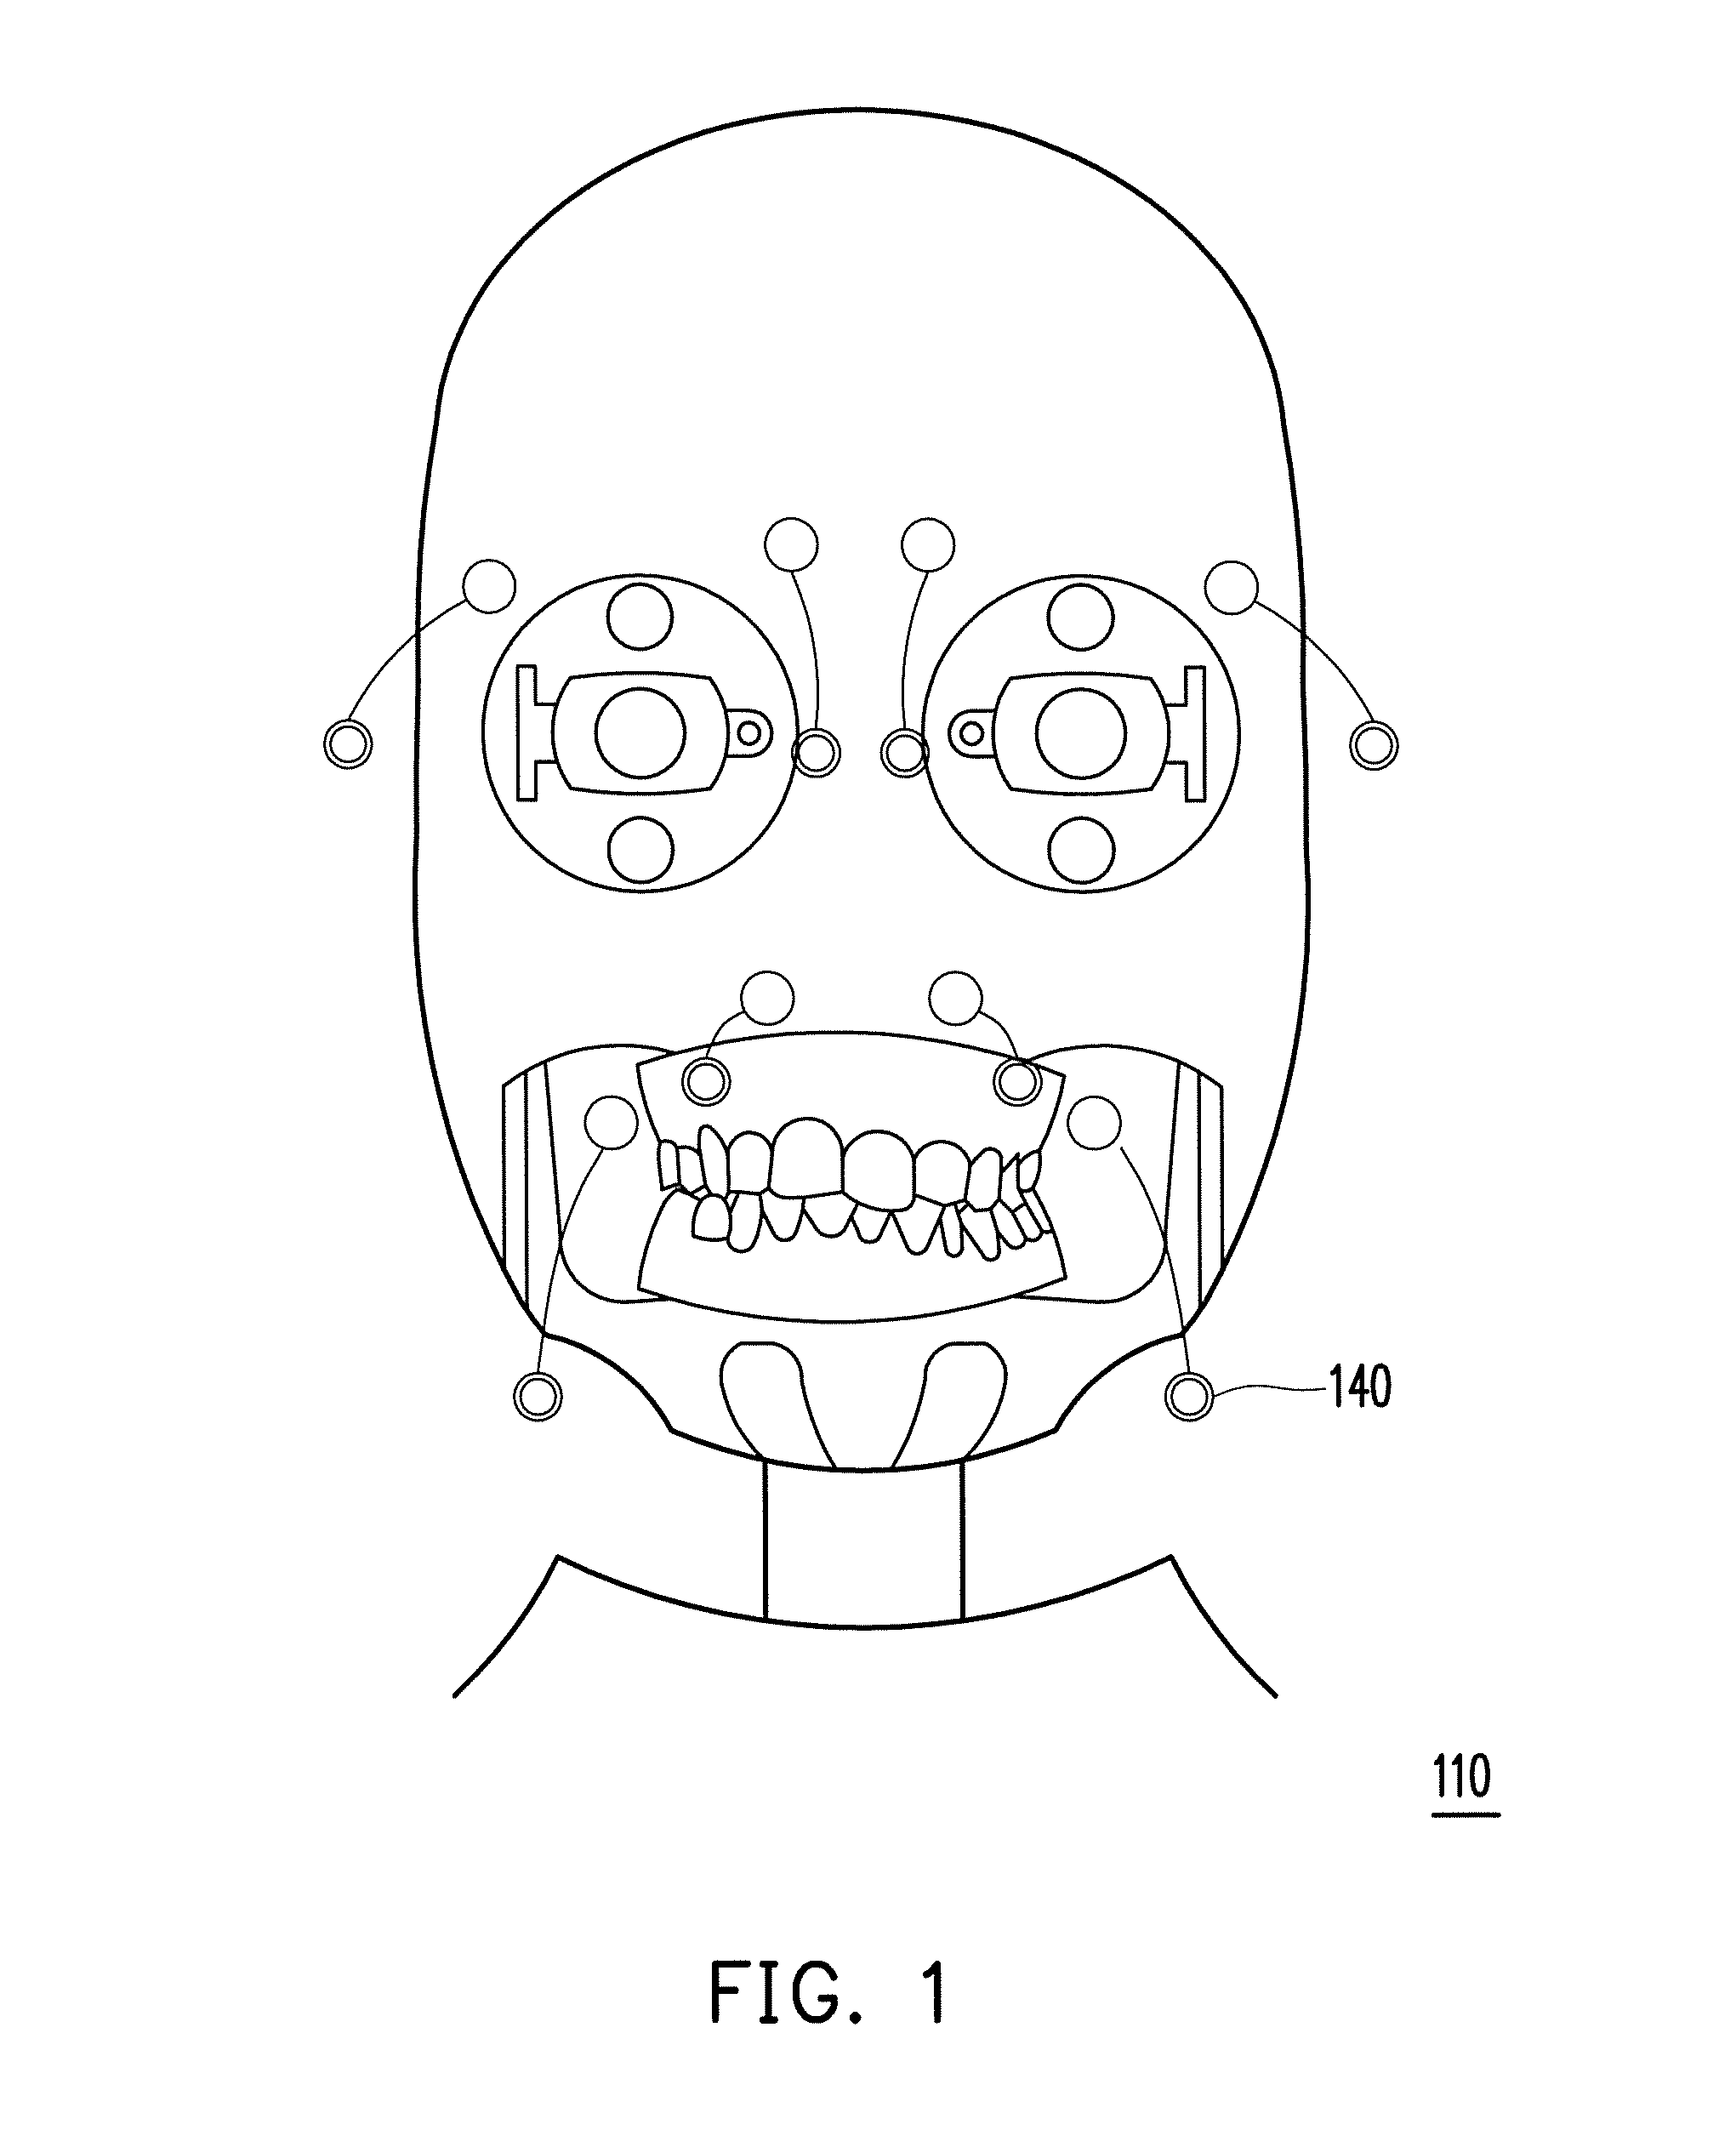 Facial expression control device